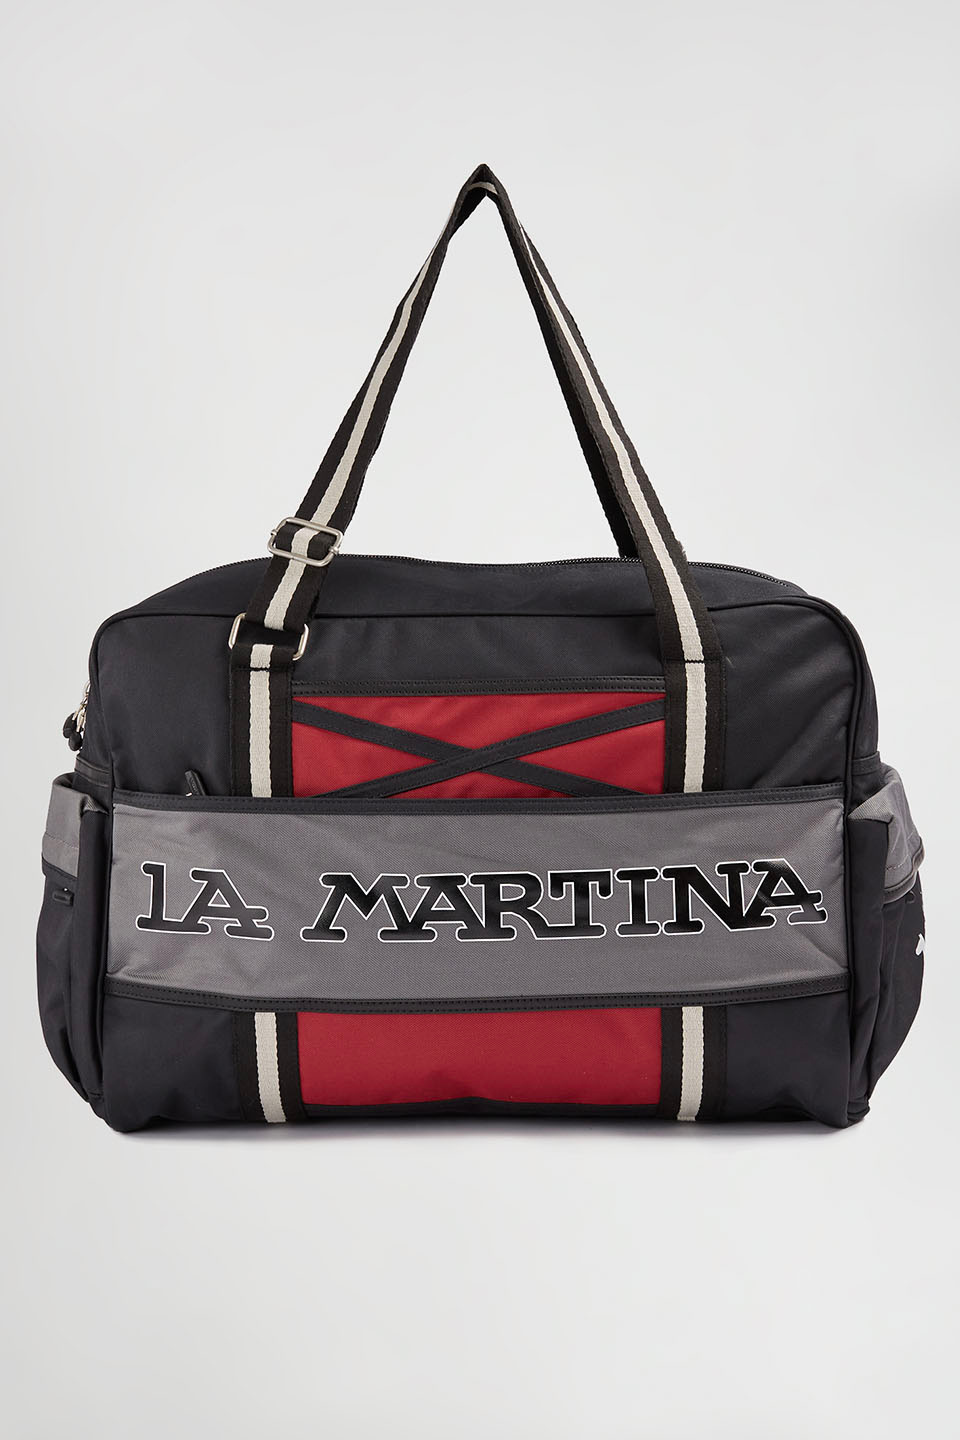 Reisetasche aus Nylon - La Martina - Official Online Shop